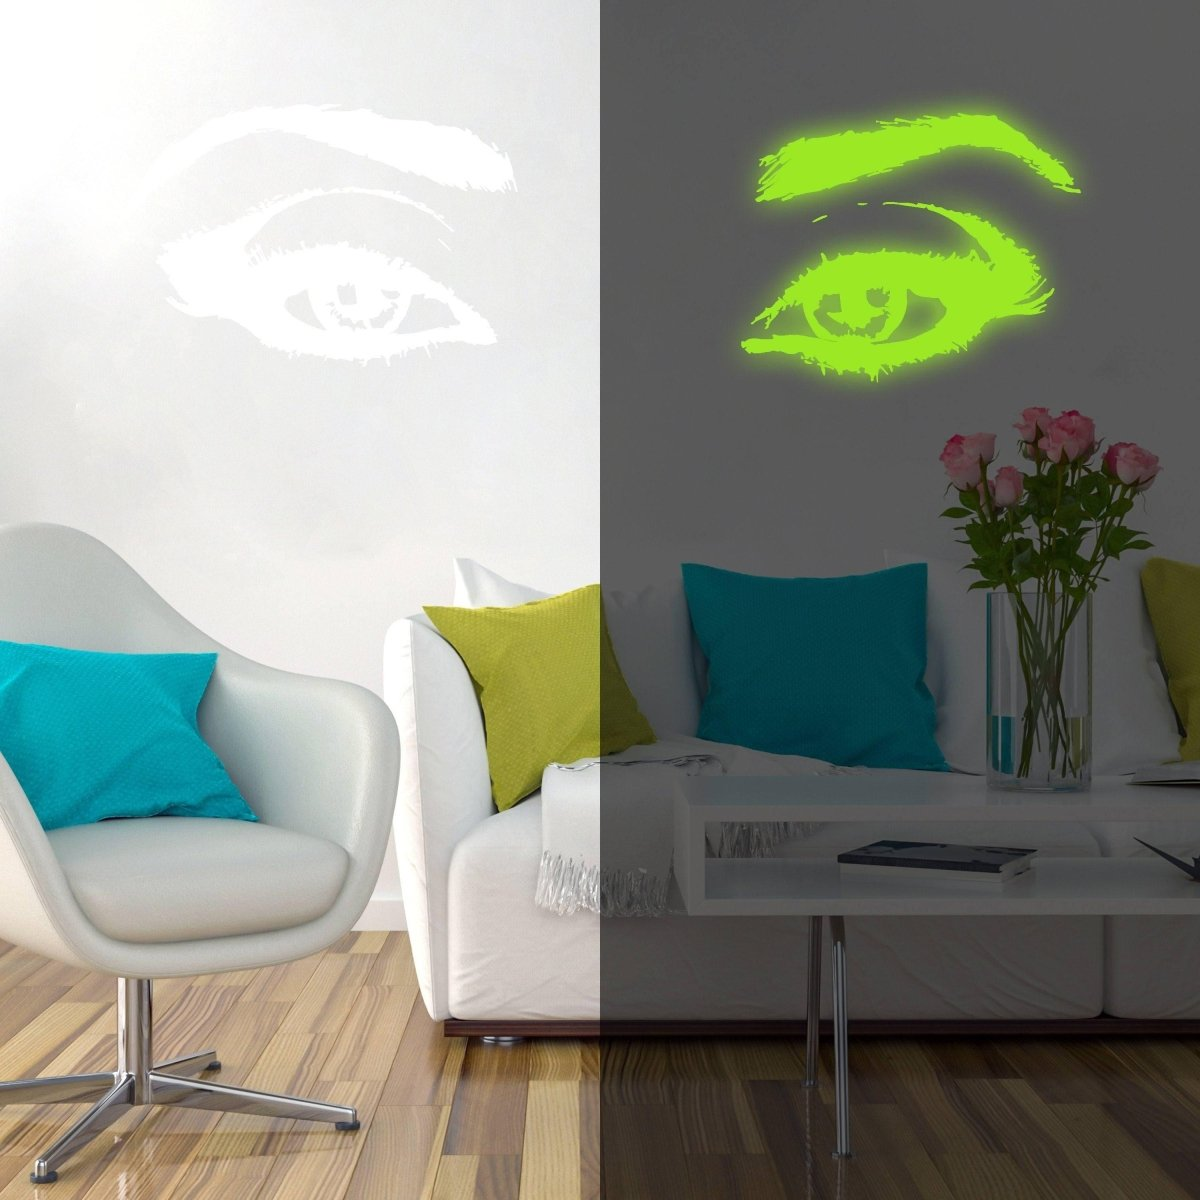 Glowing Luminescent Eye Vinyl Wall Decal: Enchanting Wall Sticker Art